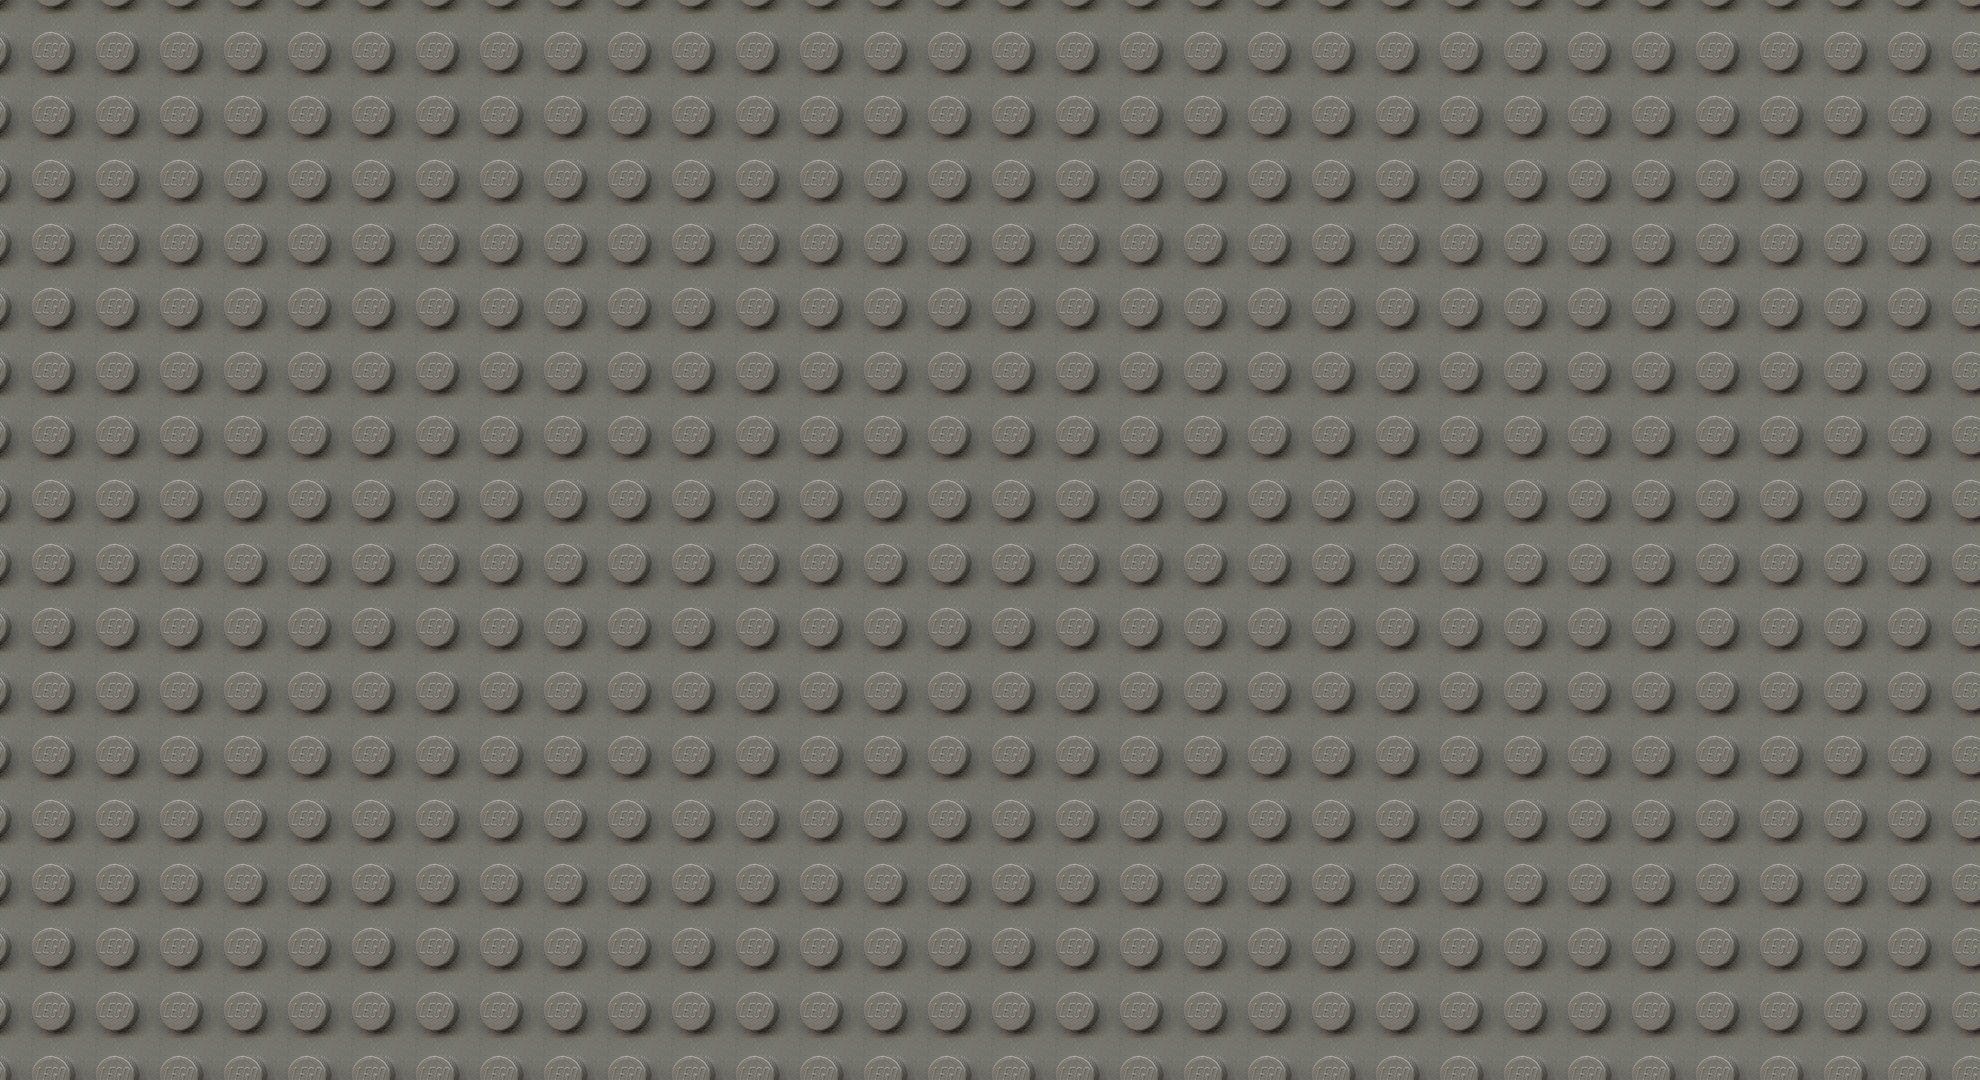 Lego backgroundDownload free cool full HD wallpaper